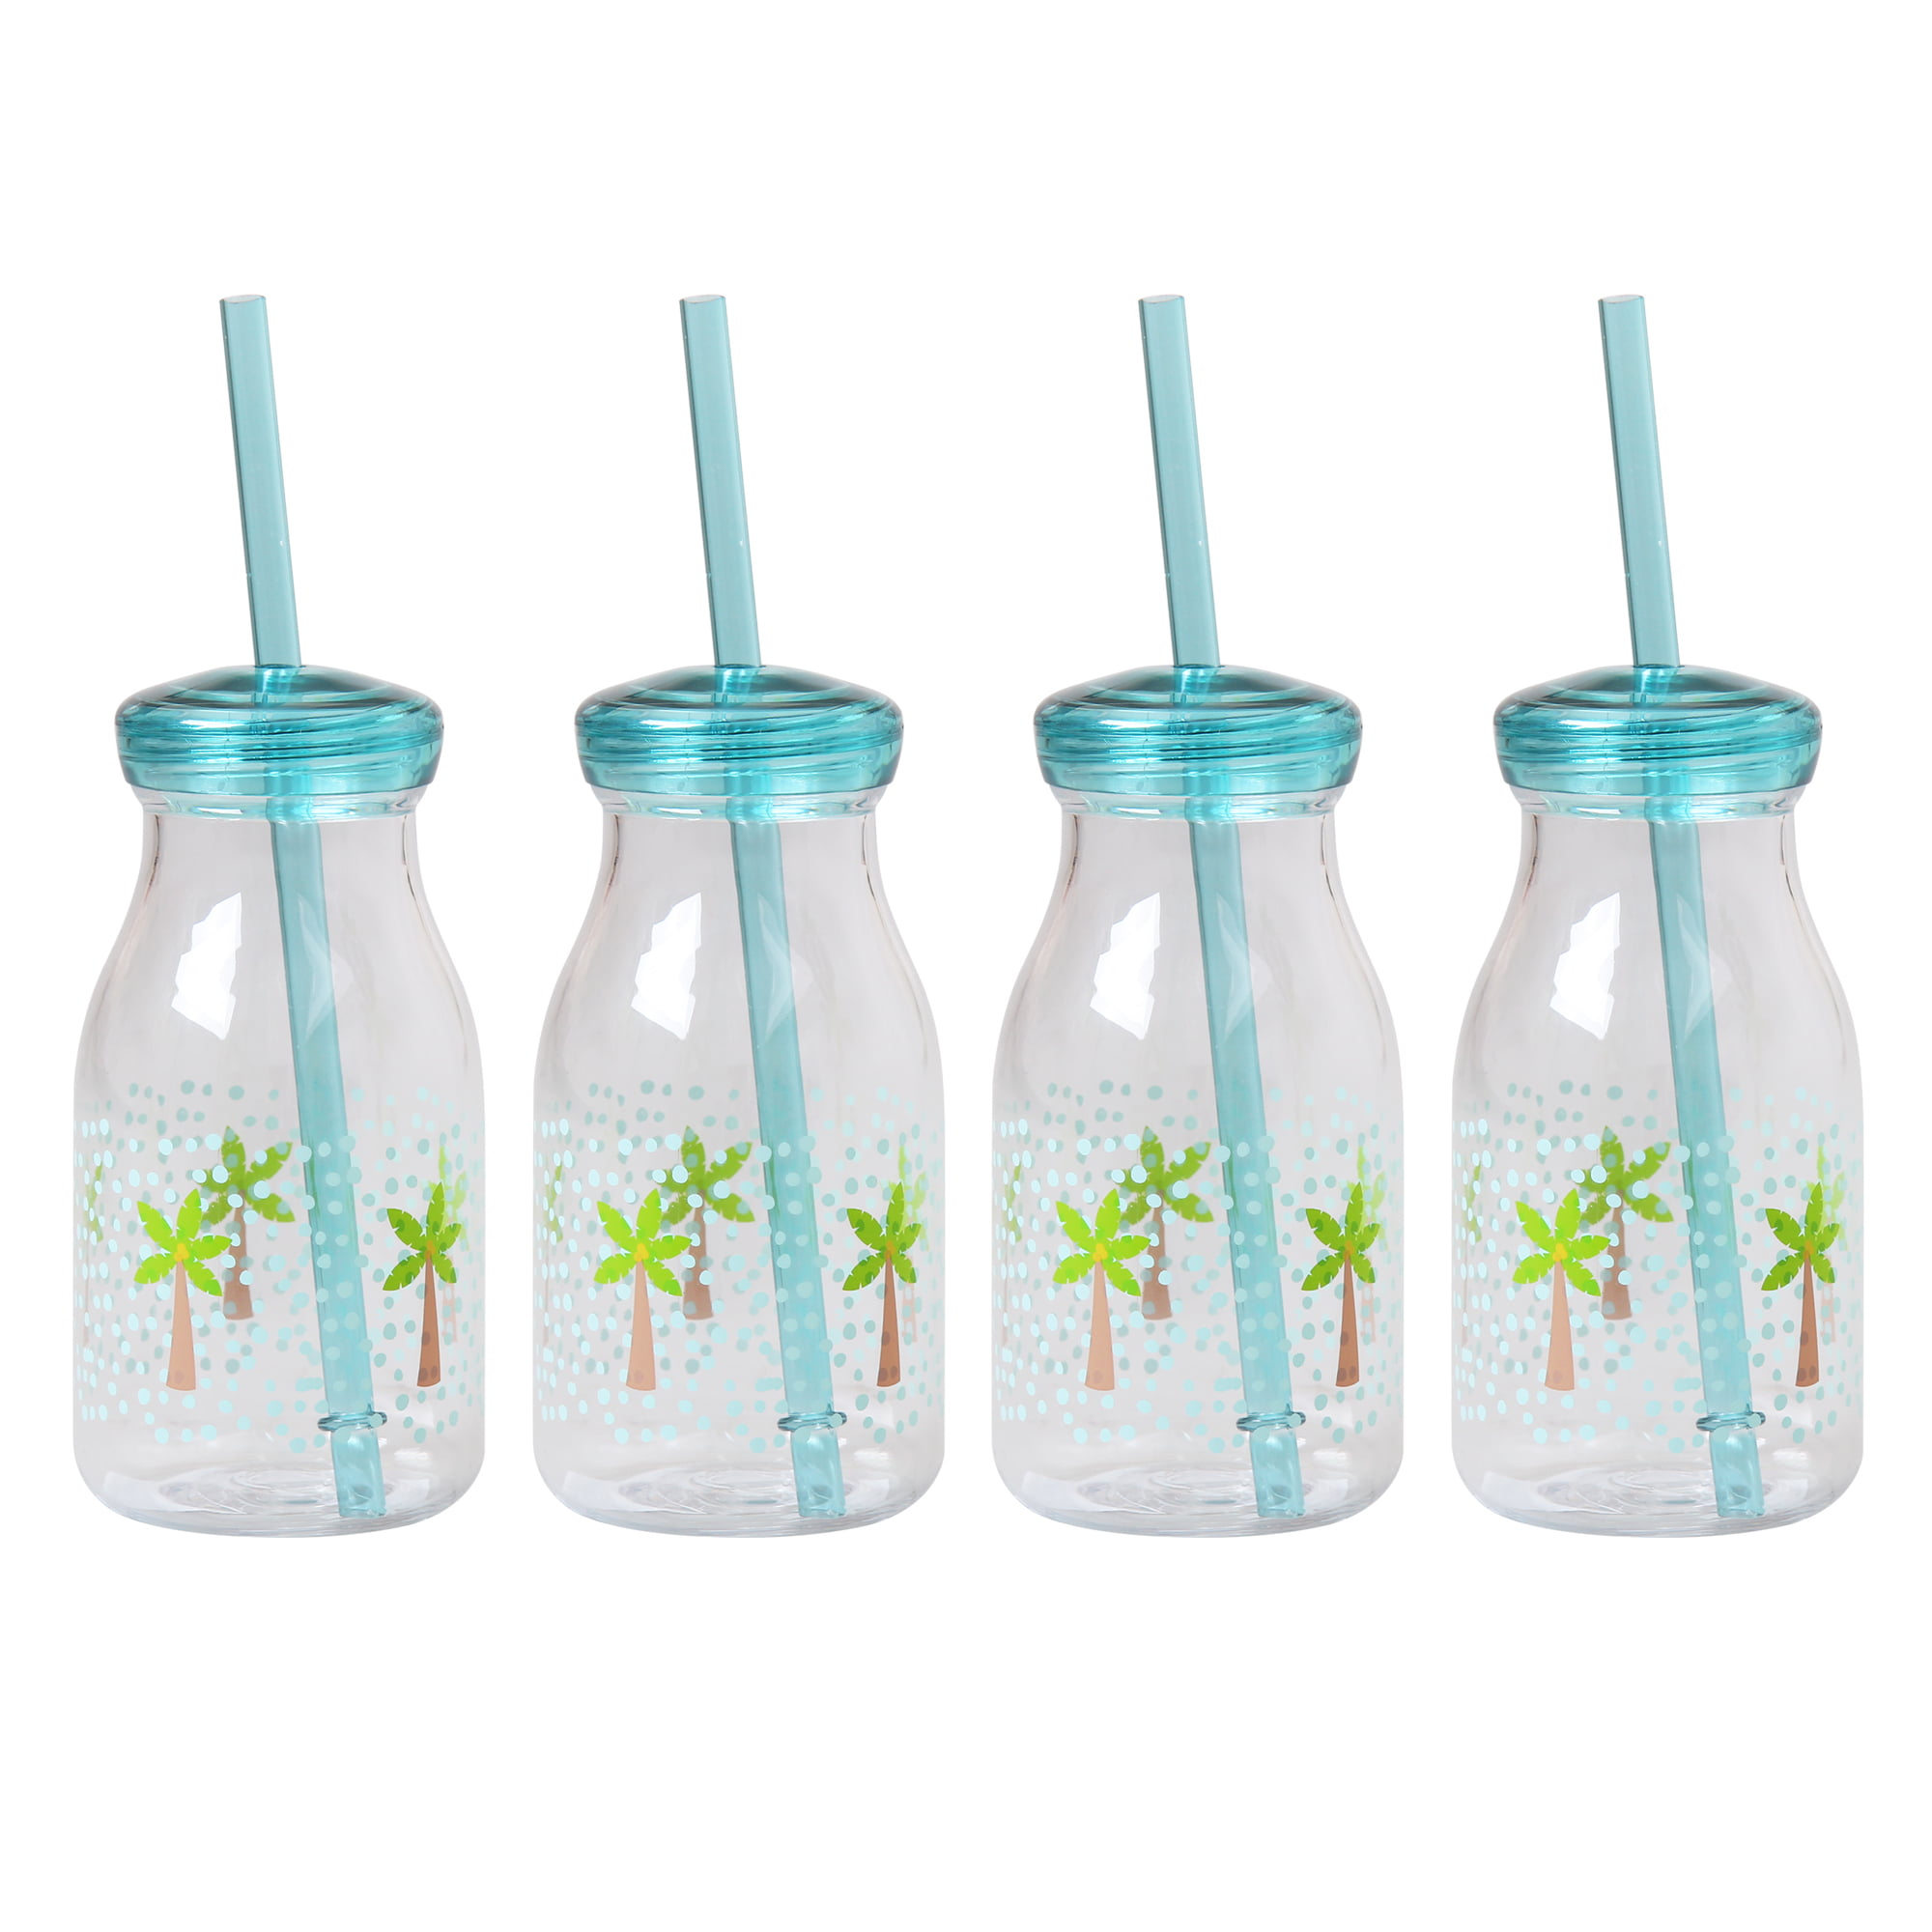 Glass Milk Bottles with Reusable Straws (9 Pack)